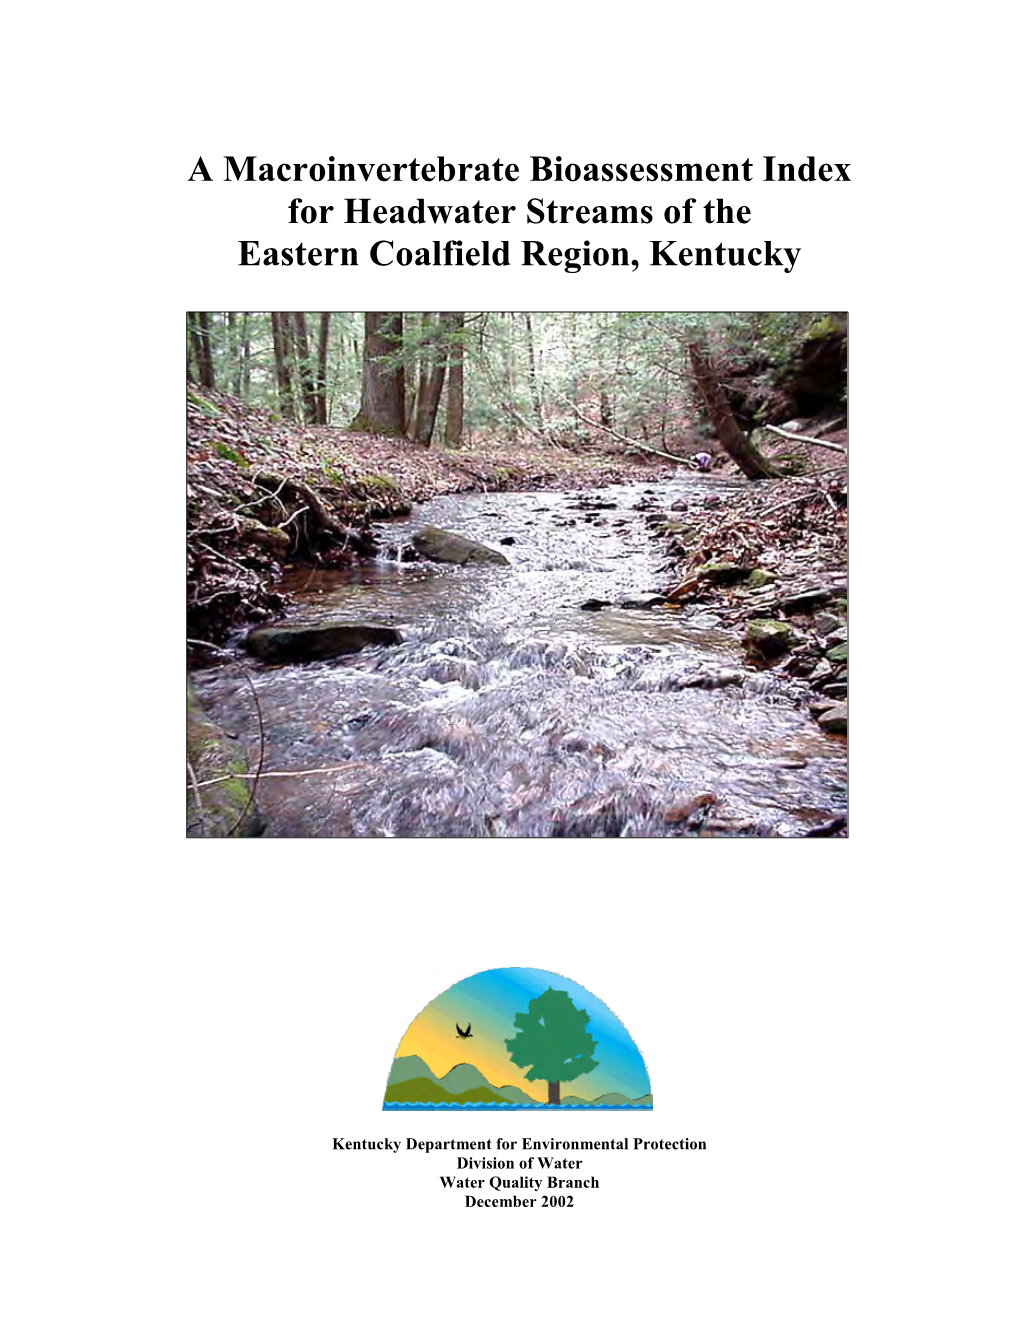 A Macroinvertebrate Bioassessment Index for Headwater Streams of the Eastern Coalfield Region, Kentucky